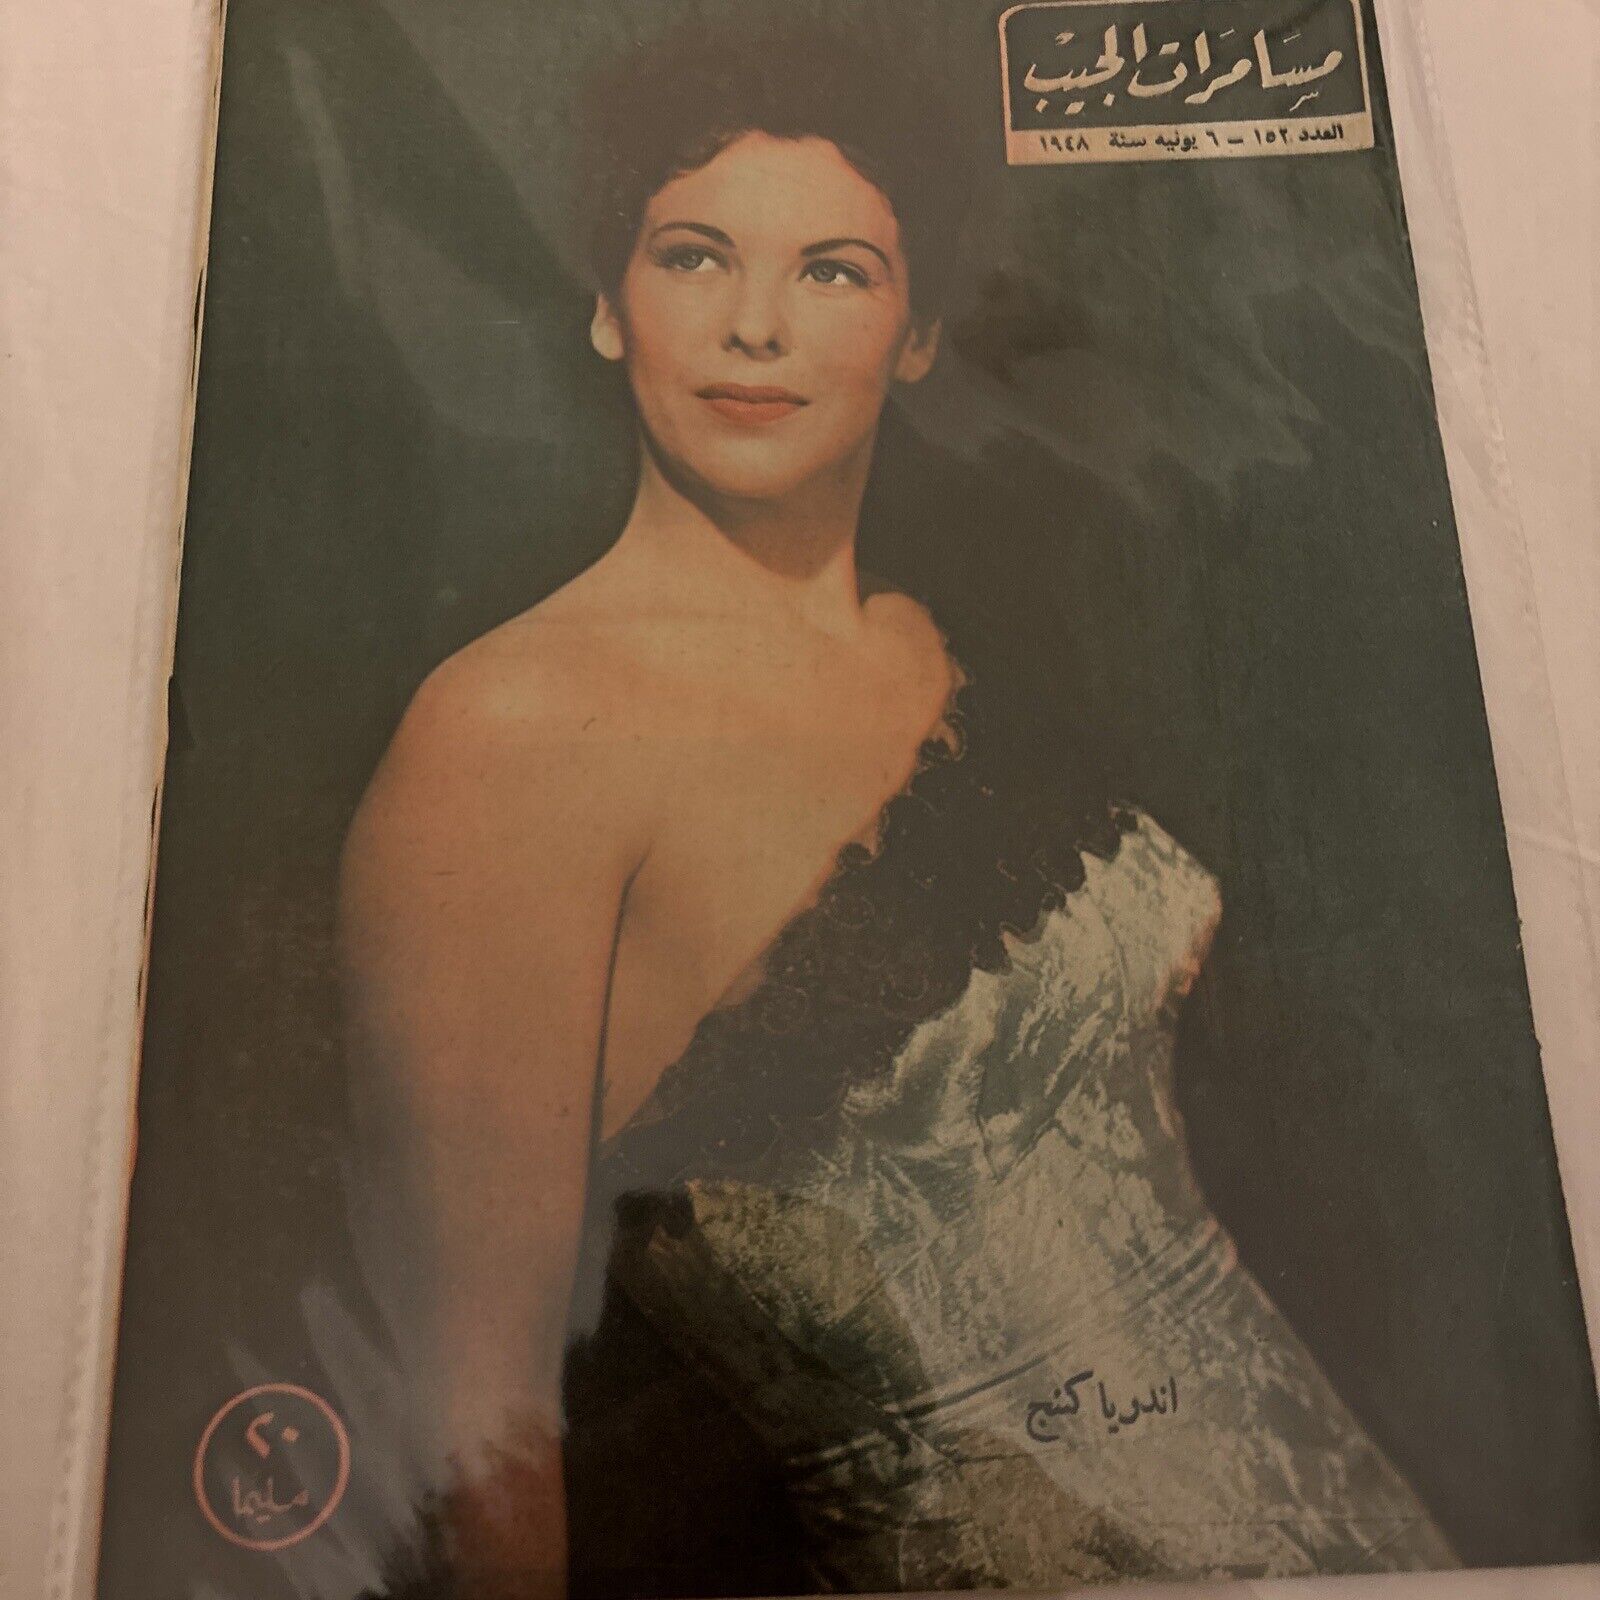 1946 Arabic Magazine Actress Andrea King Cover Scarce Hollywood